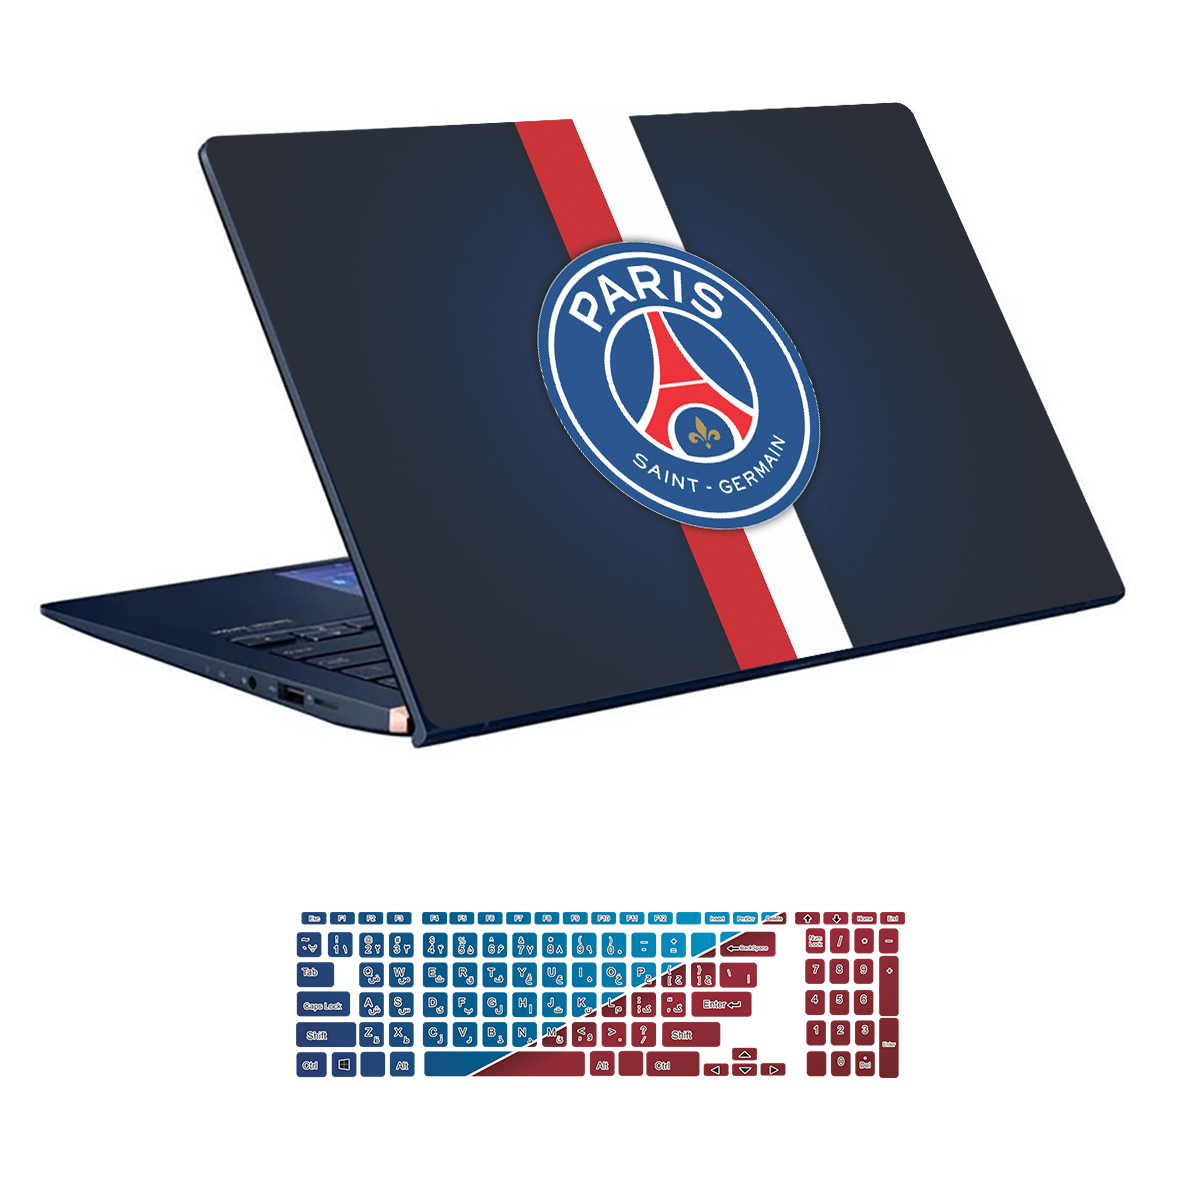 Paris saint germain design laptop skin code 04 with keyboard sticker